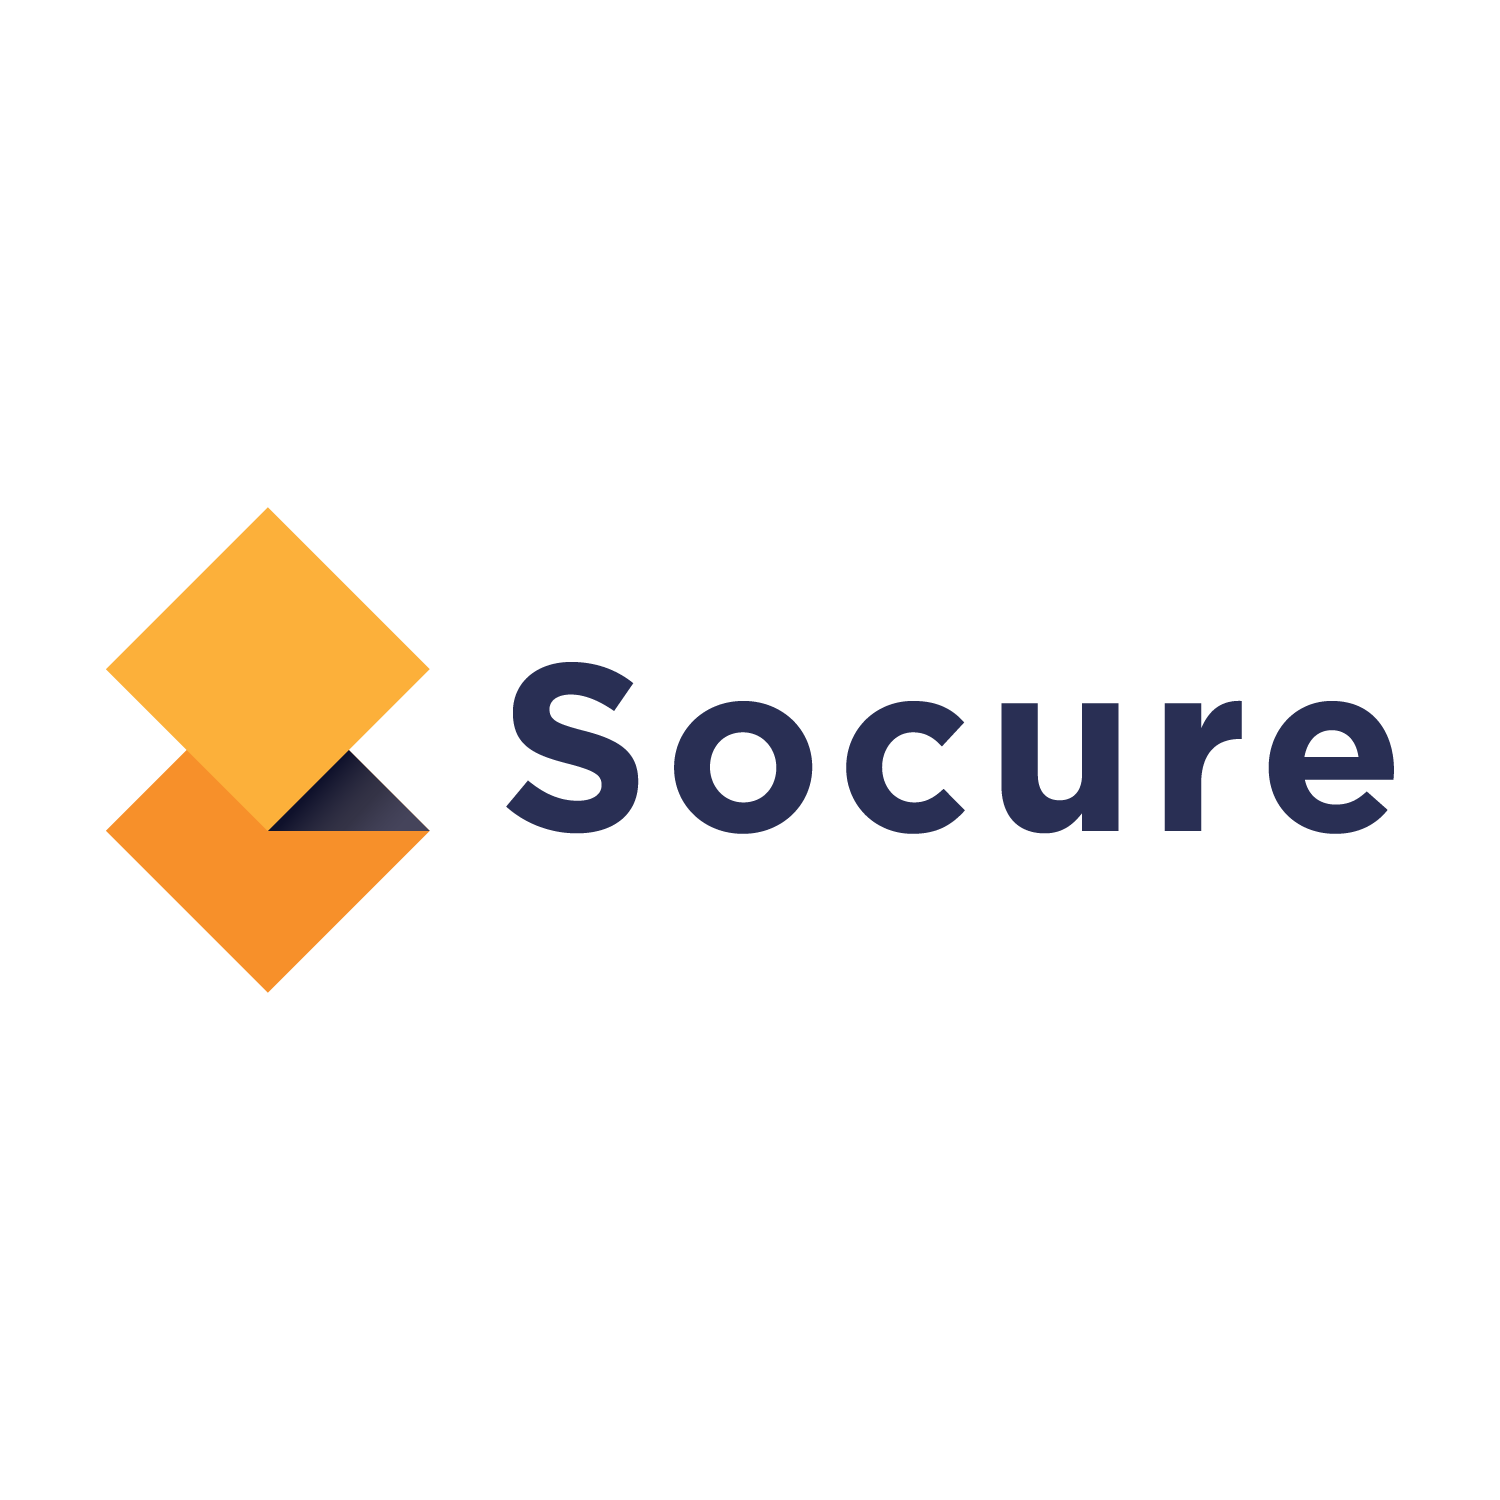 Socure Логотип png